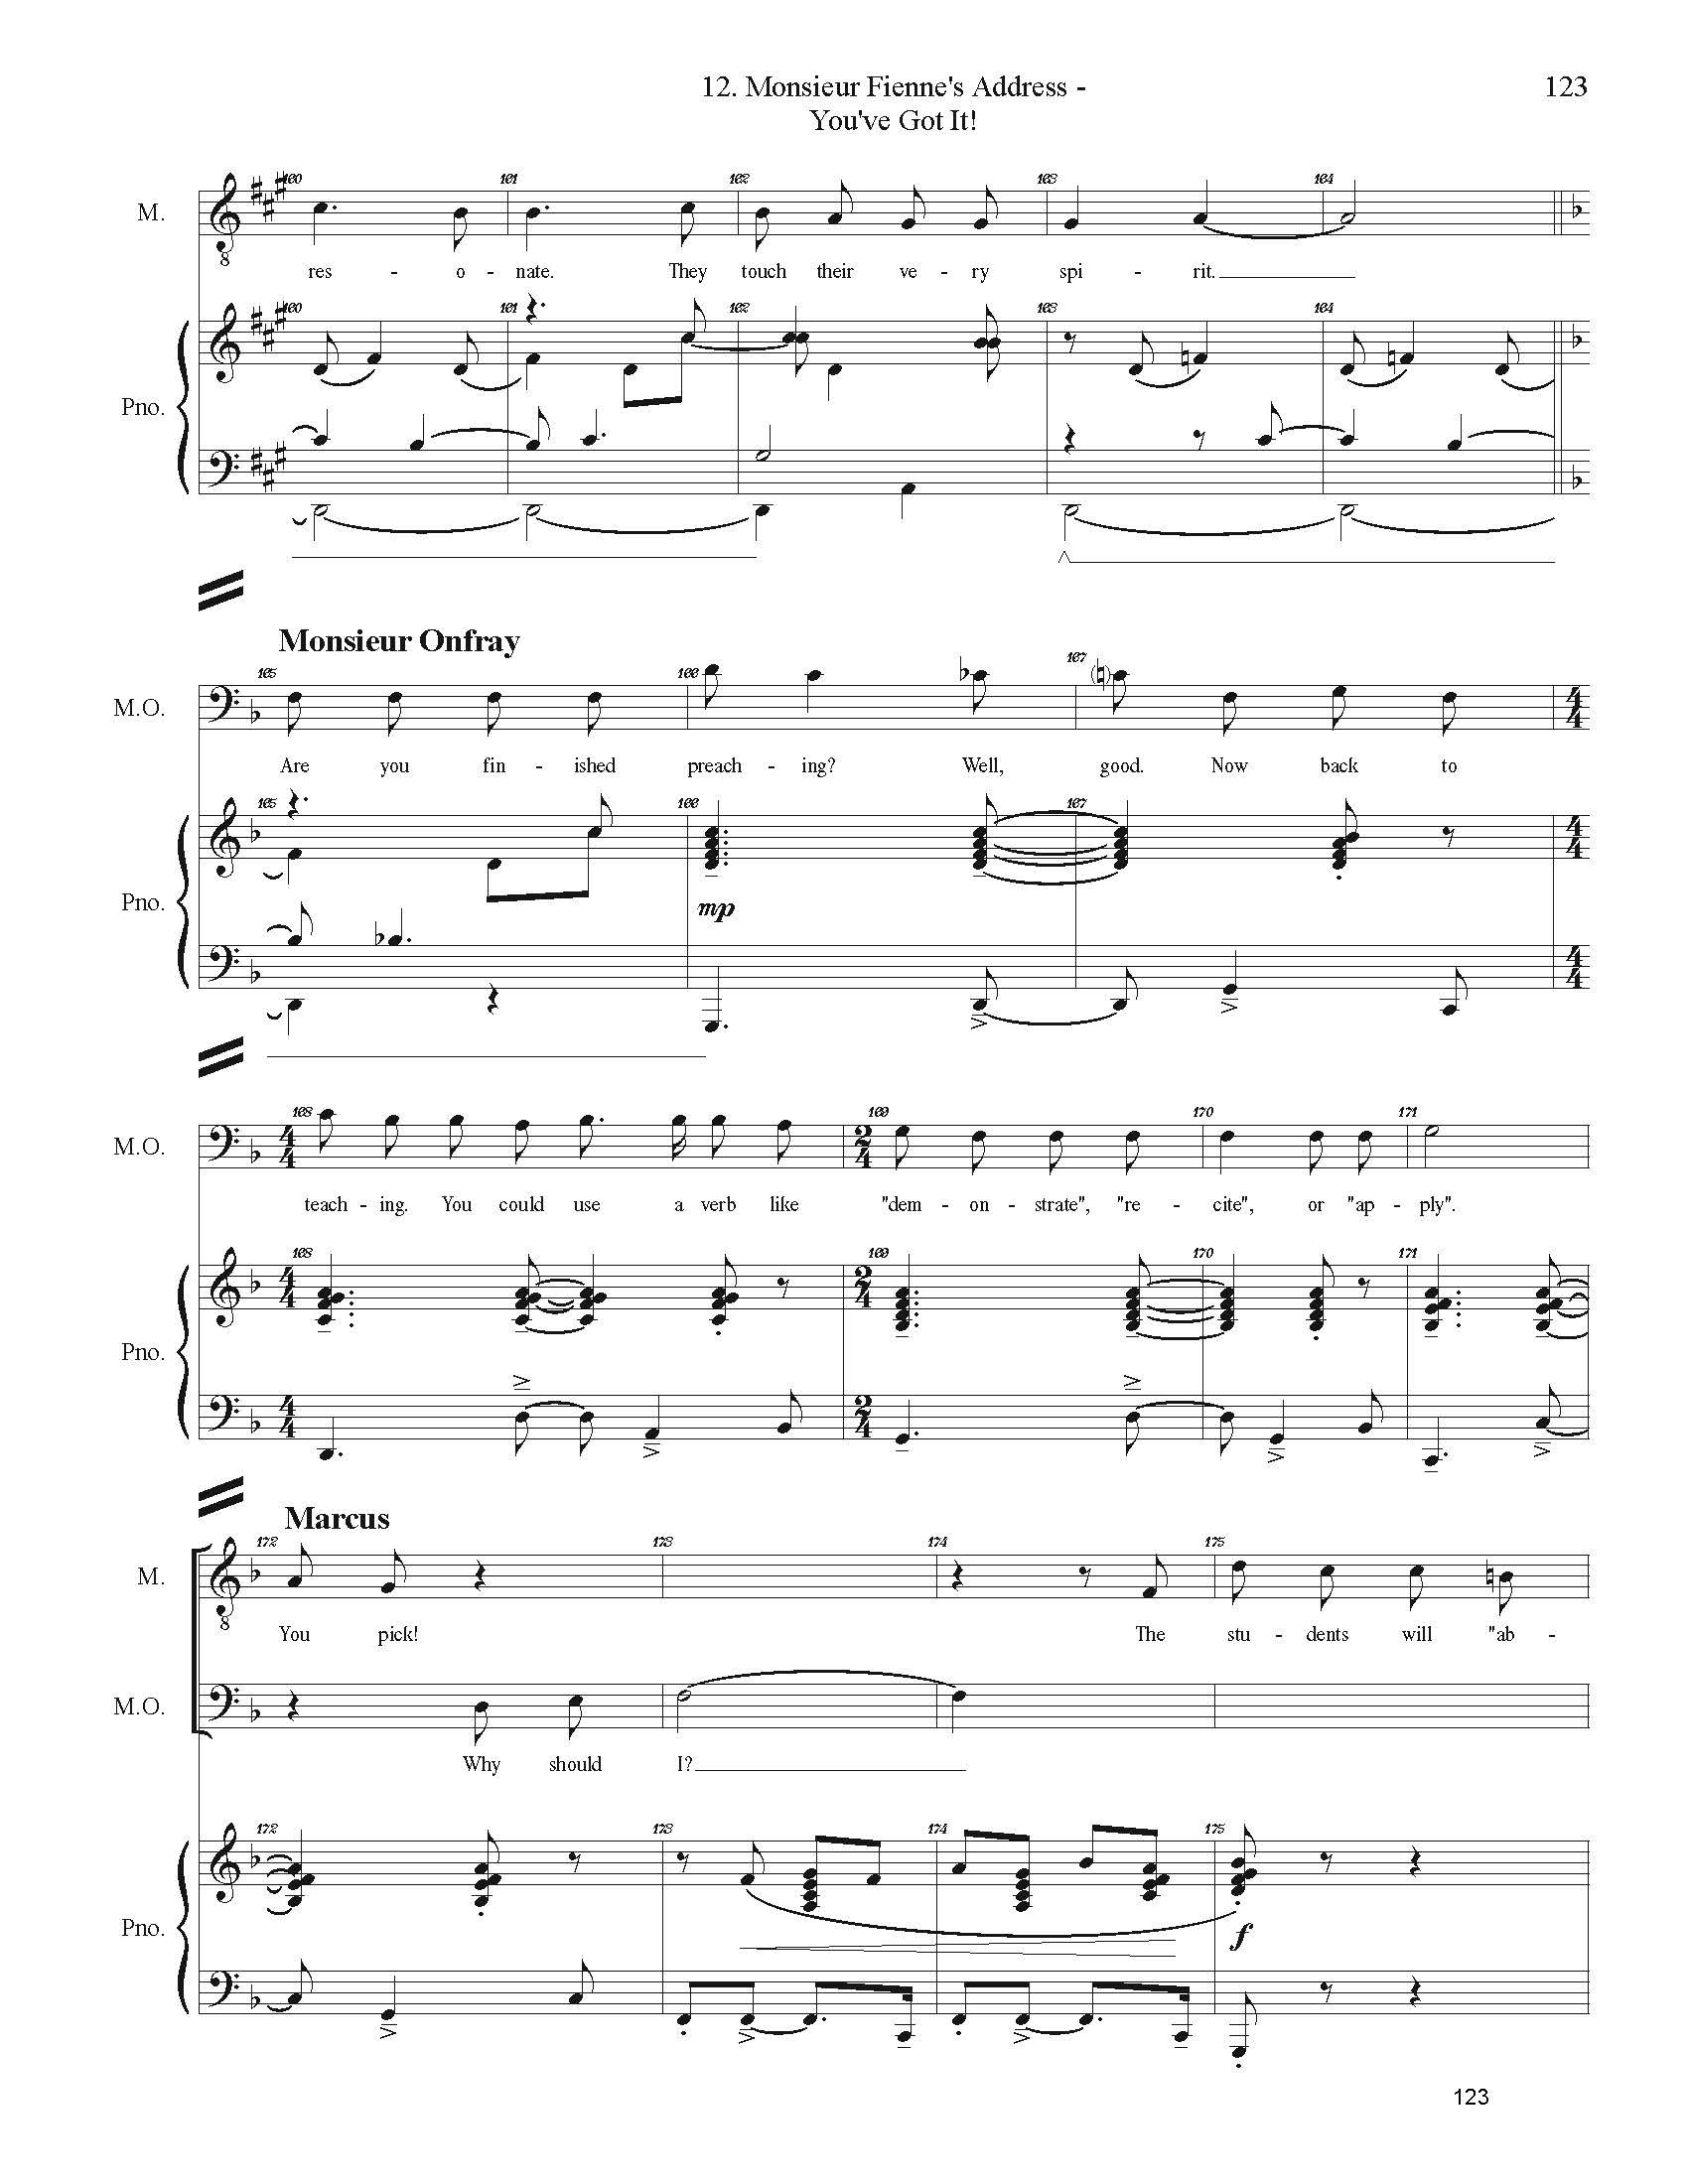 FULL PIANO VOCAL SCORE DRAFT 1 - Score_Page_123.jpg